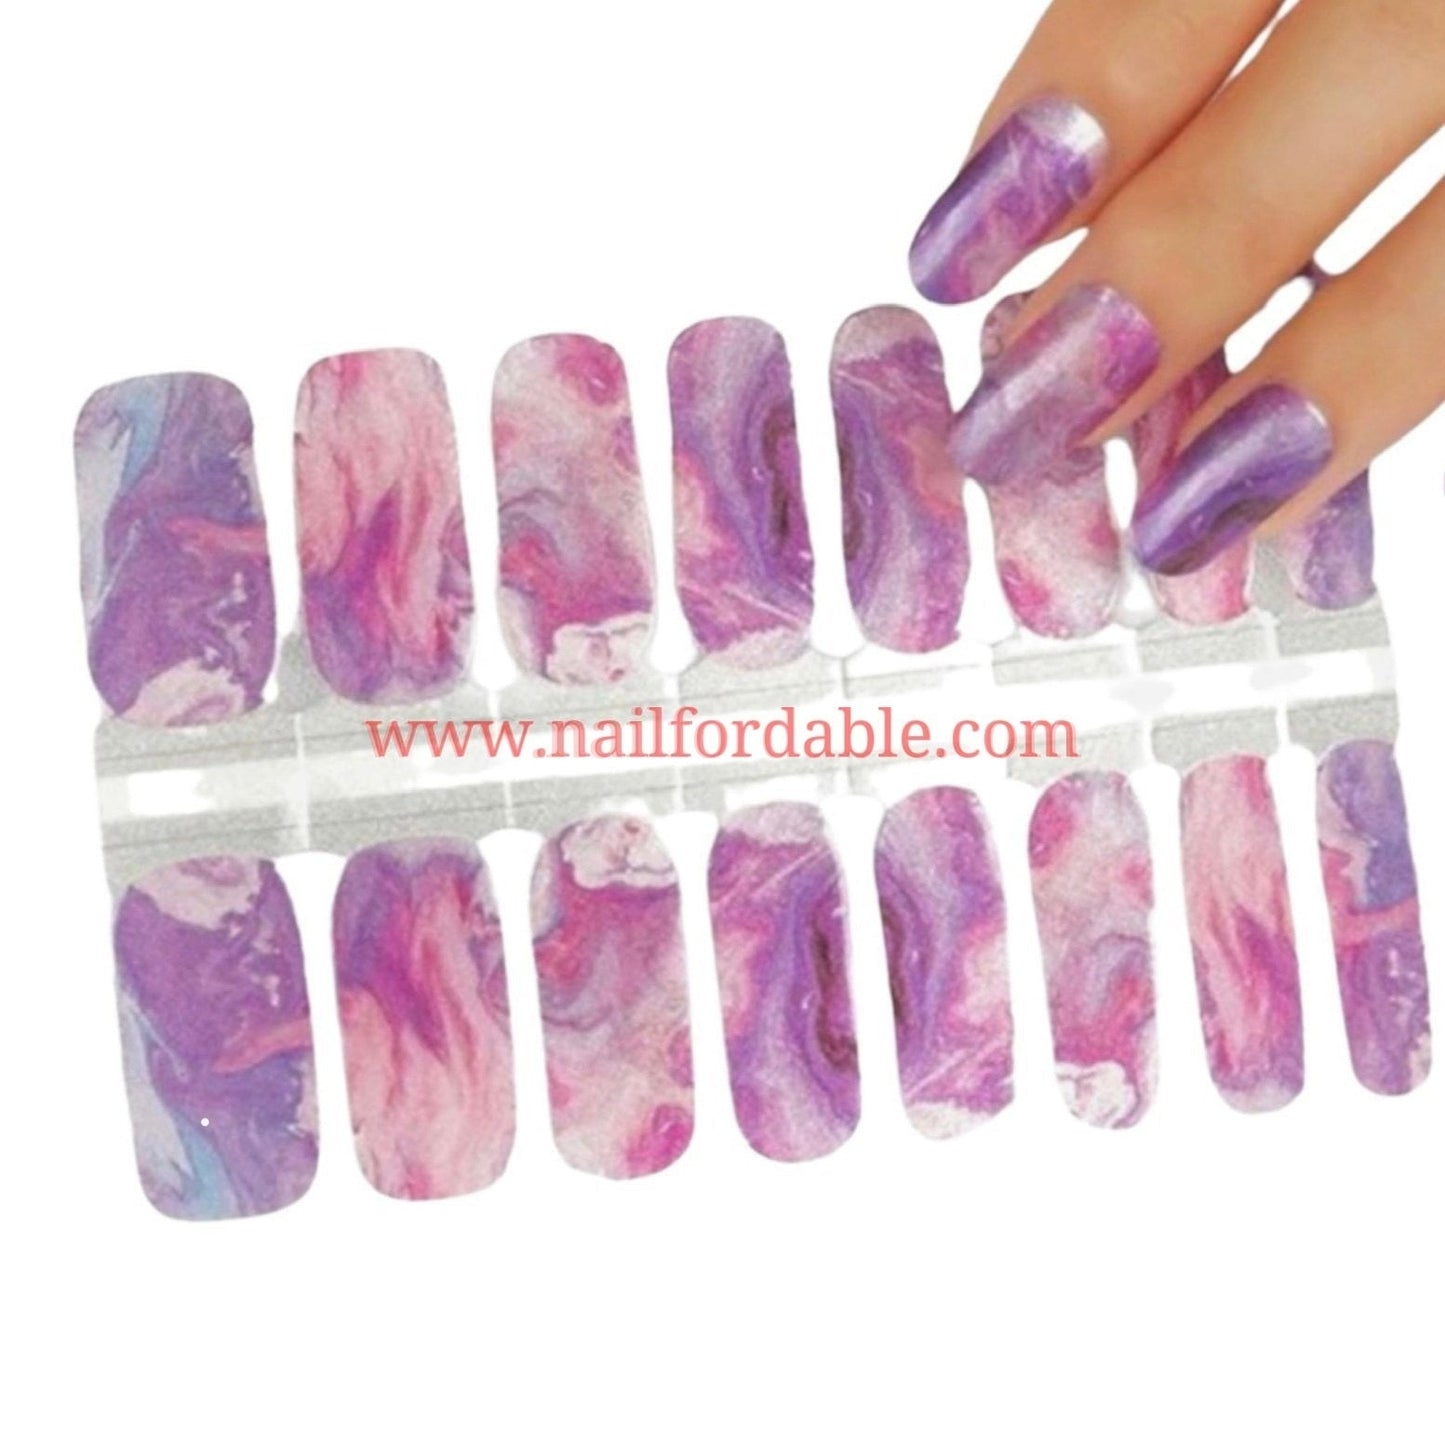 Marble mix Nail Wraps | Semi Cured Gel Wraps | Gel Nail Wraps |Nail Polish | Nail Stickers